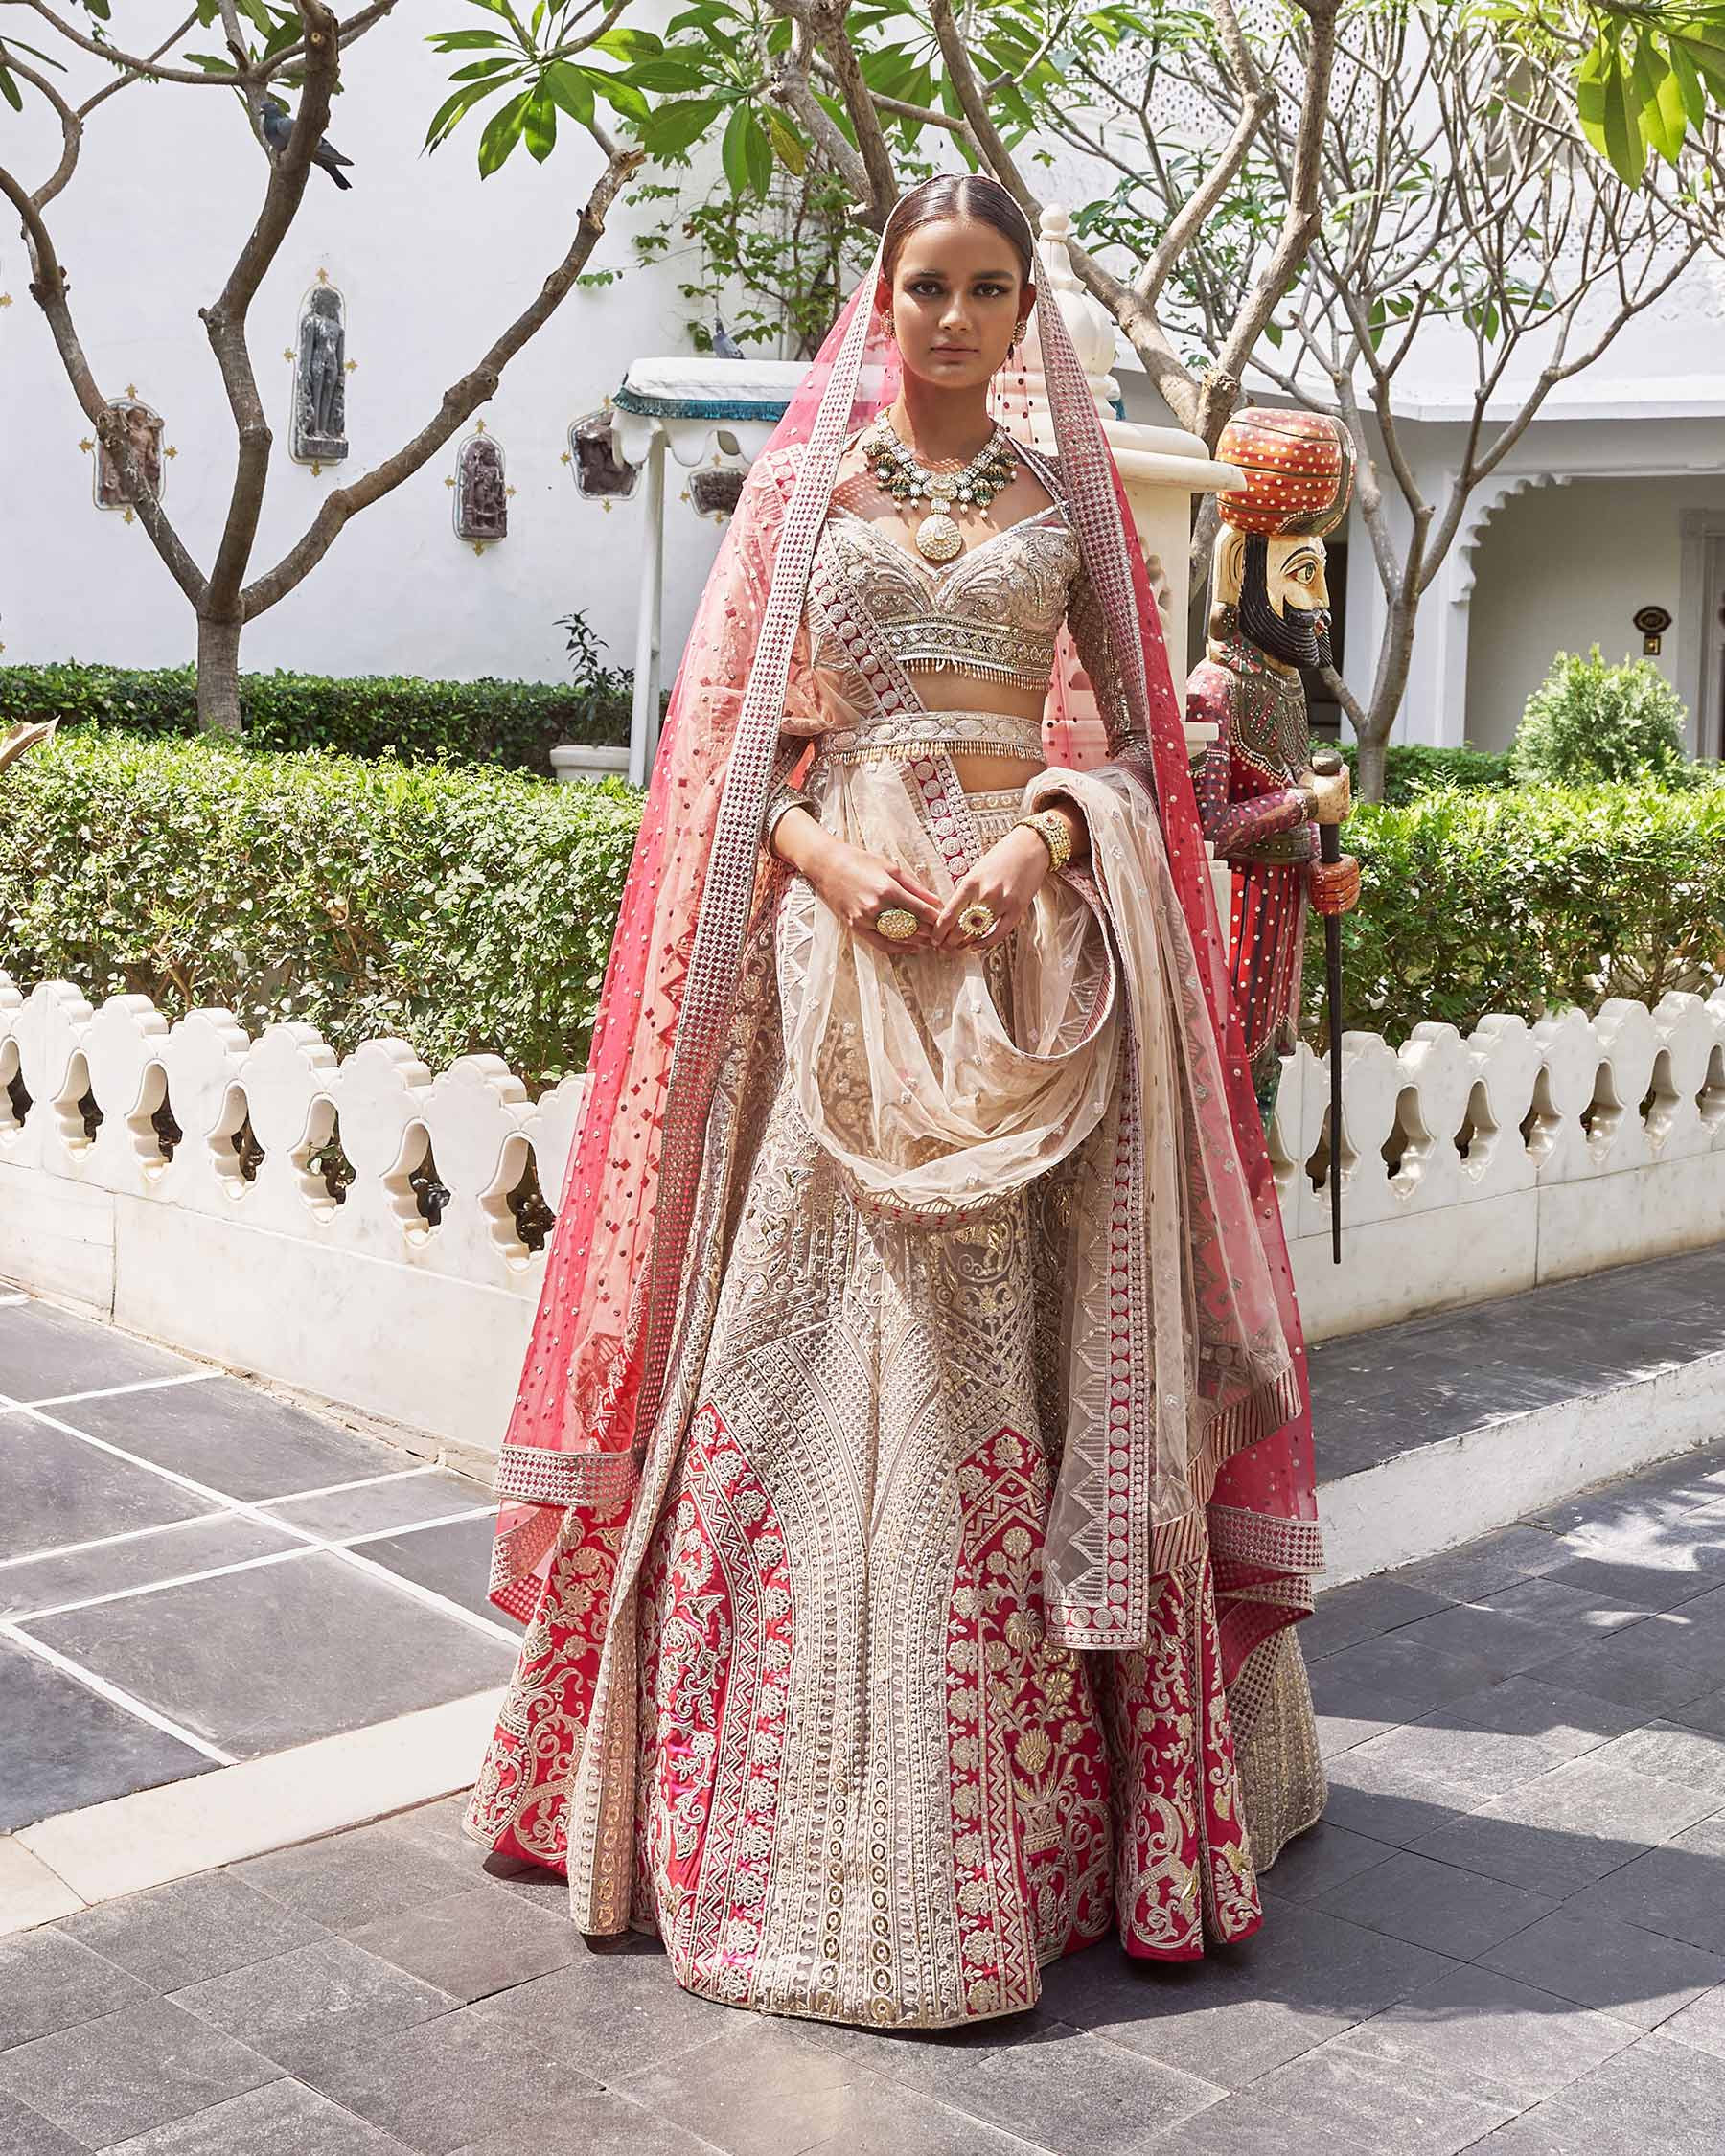 Buy Indian heavy embroidery wedding lehenga choli Indian wedding bridal  lehenga Ghagra choli chaniya choli bridesmaids dress lengha01 at Amazon.in